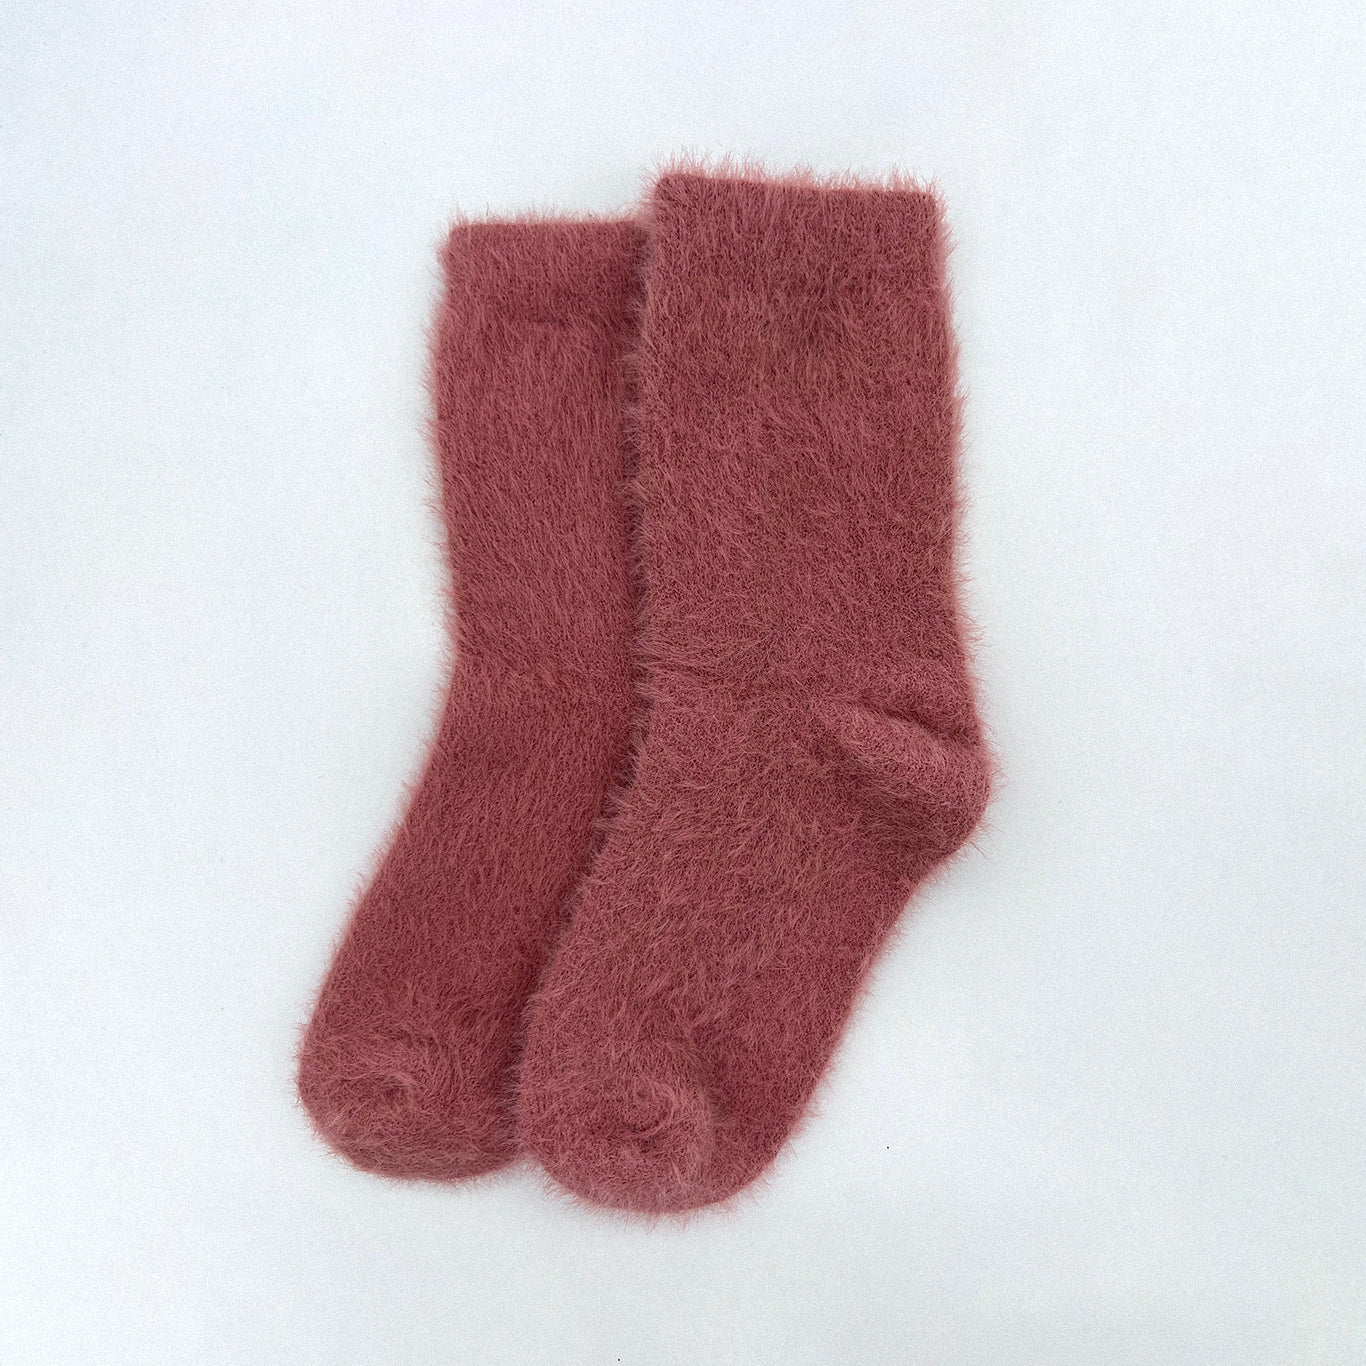 Angora Socks